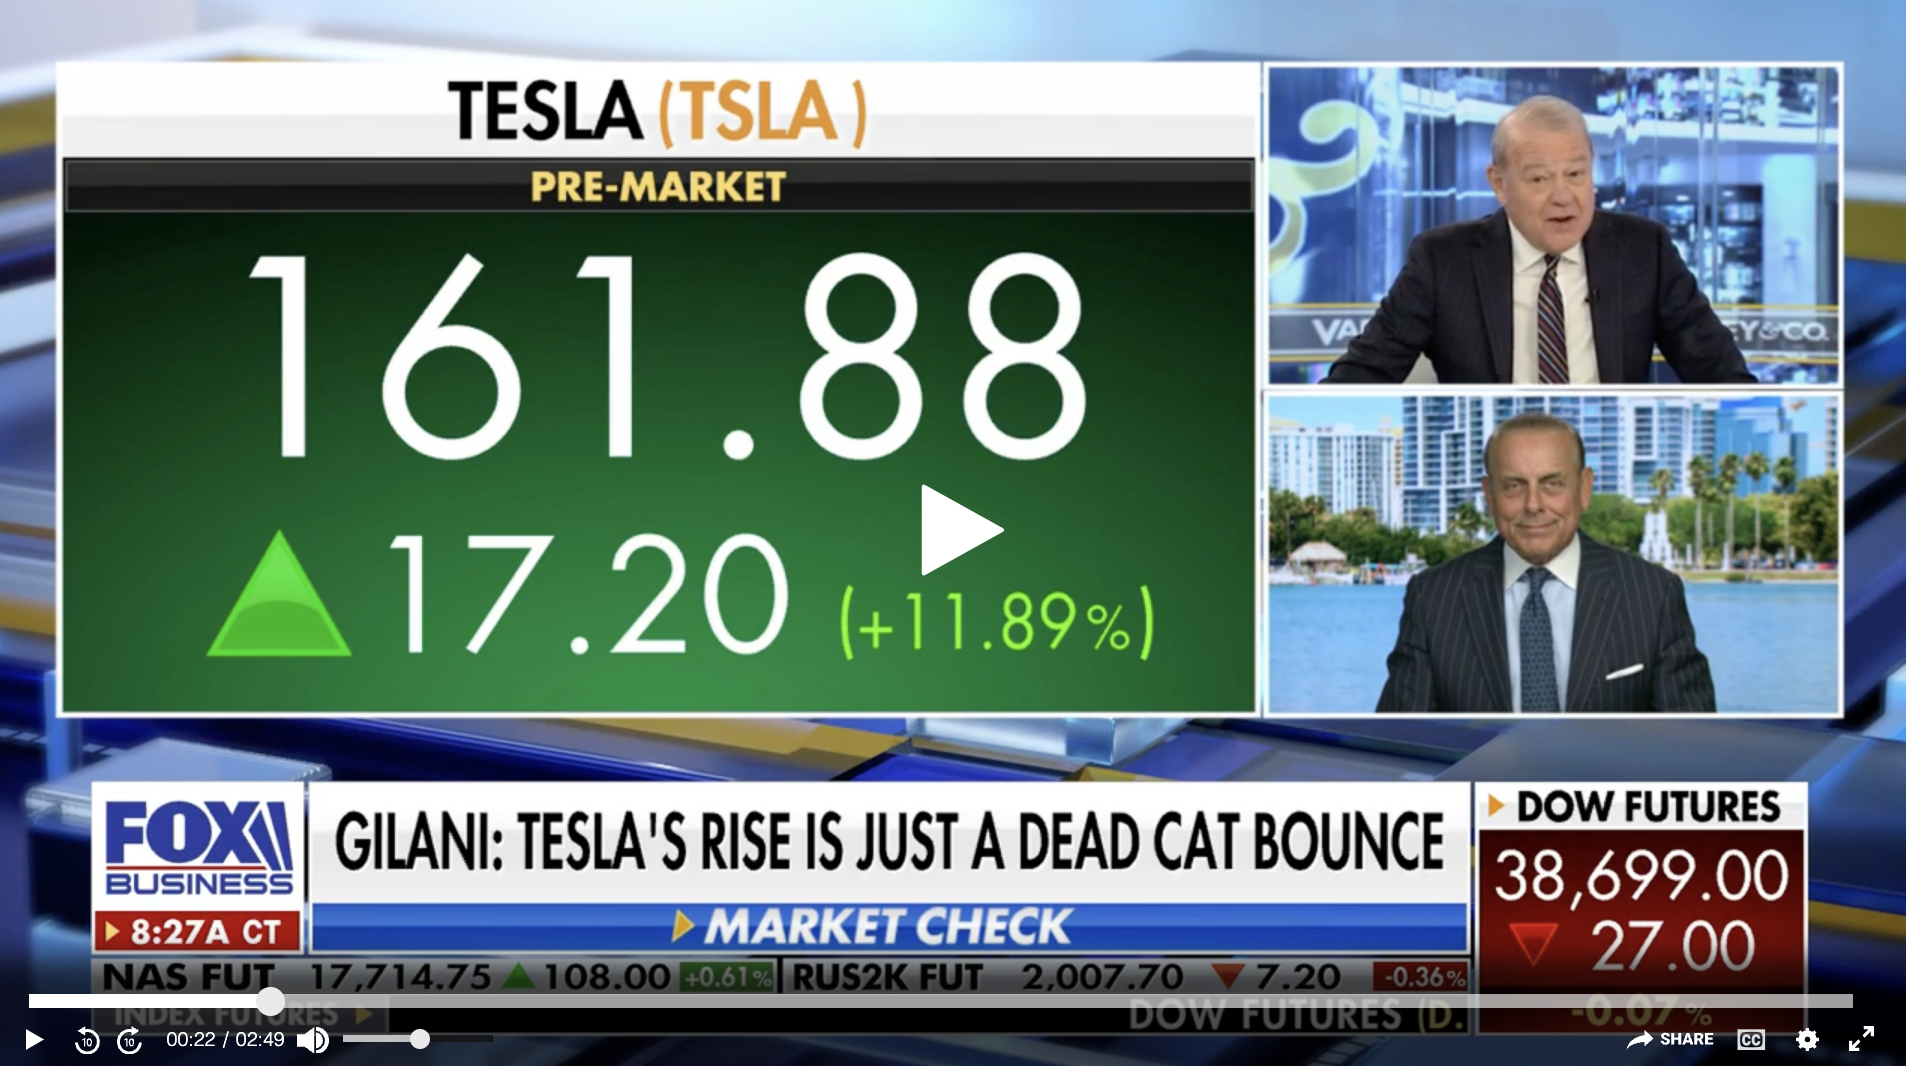 Tesla’s rise is just a dead cat bounce